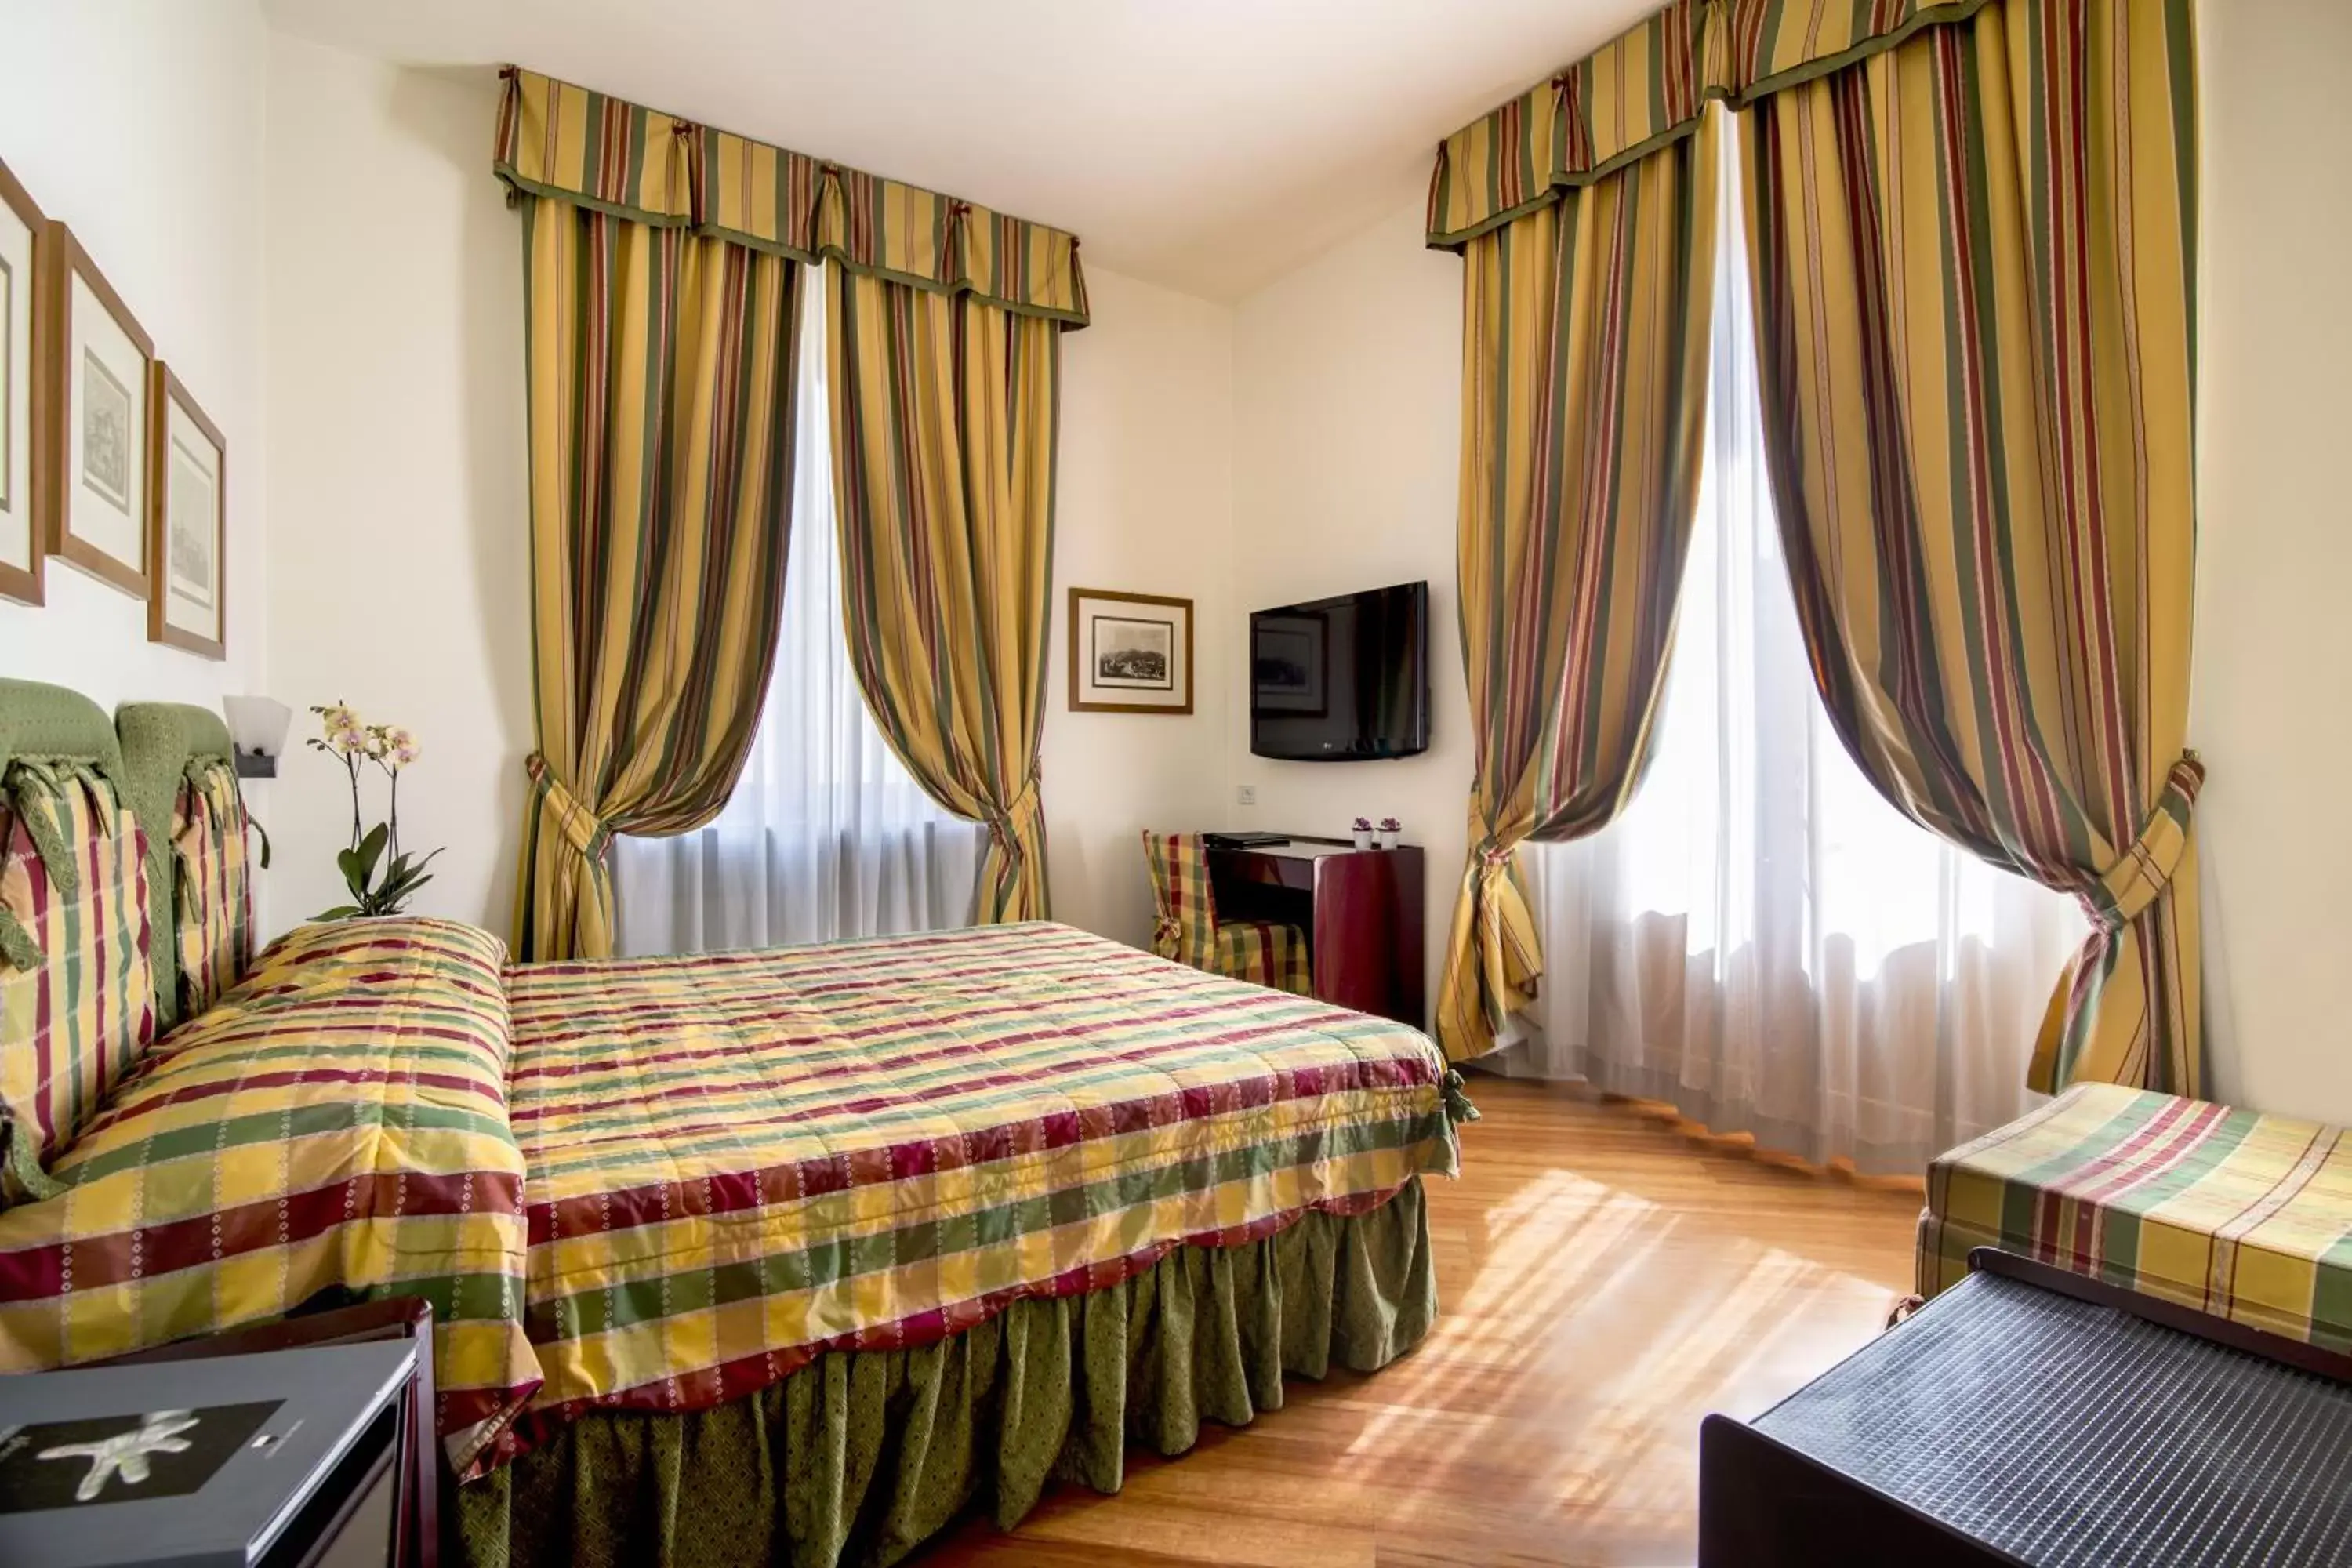 Bedroom, Room Photo in Hotel Italia